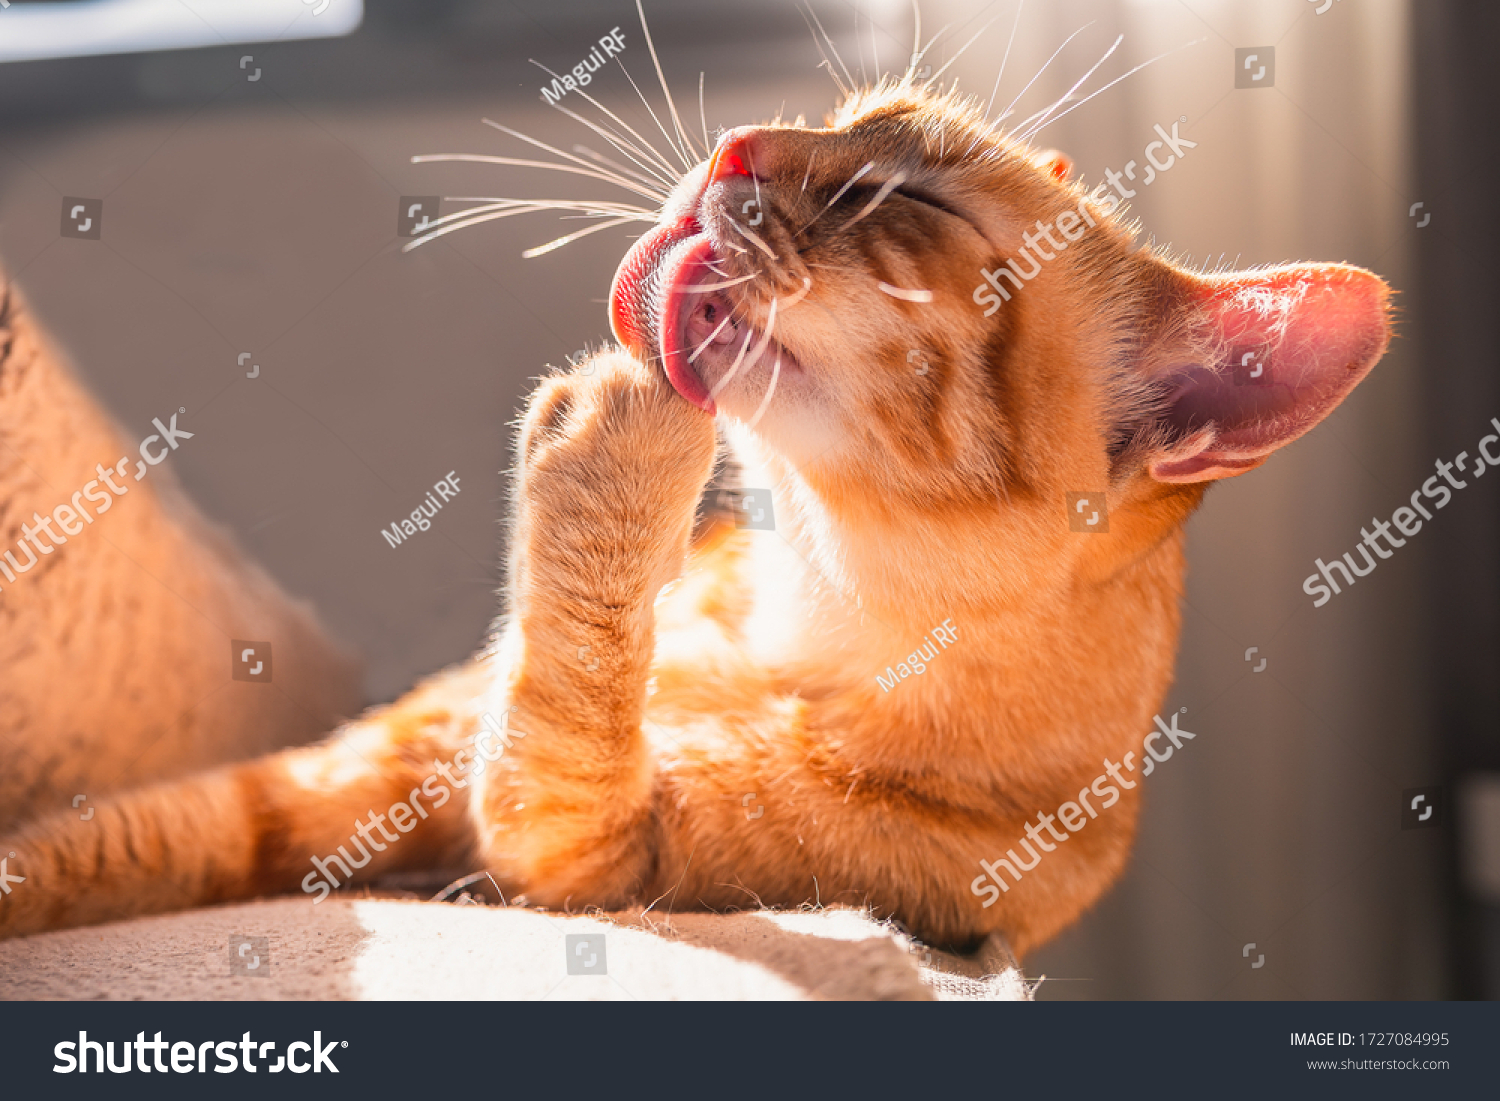 Cat Licking